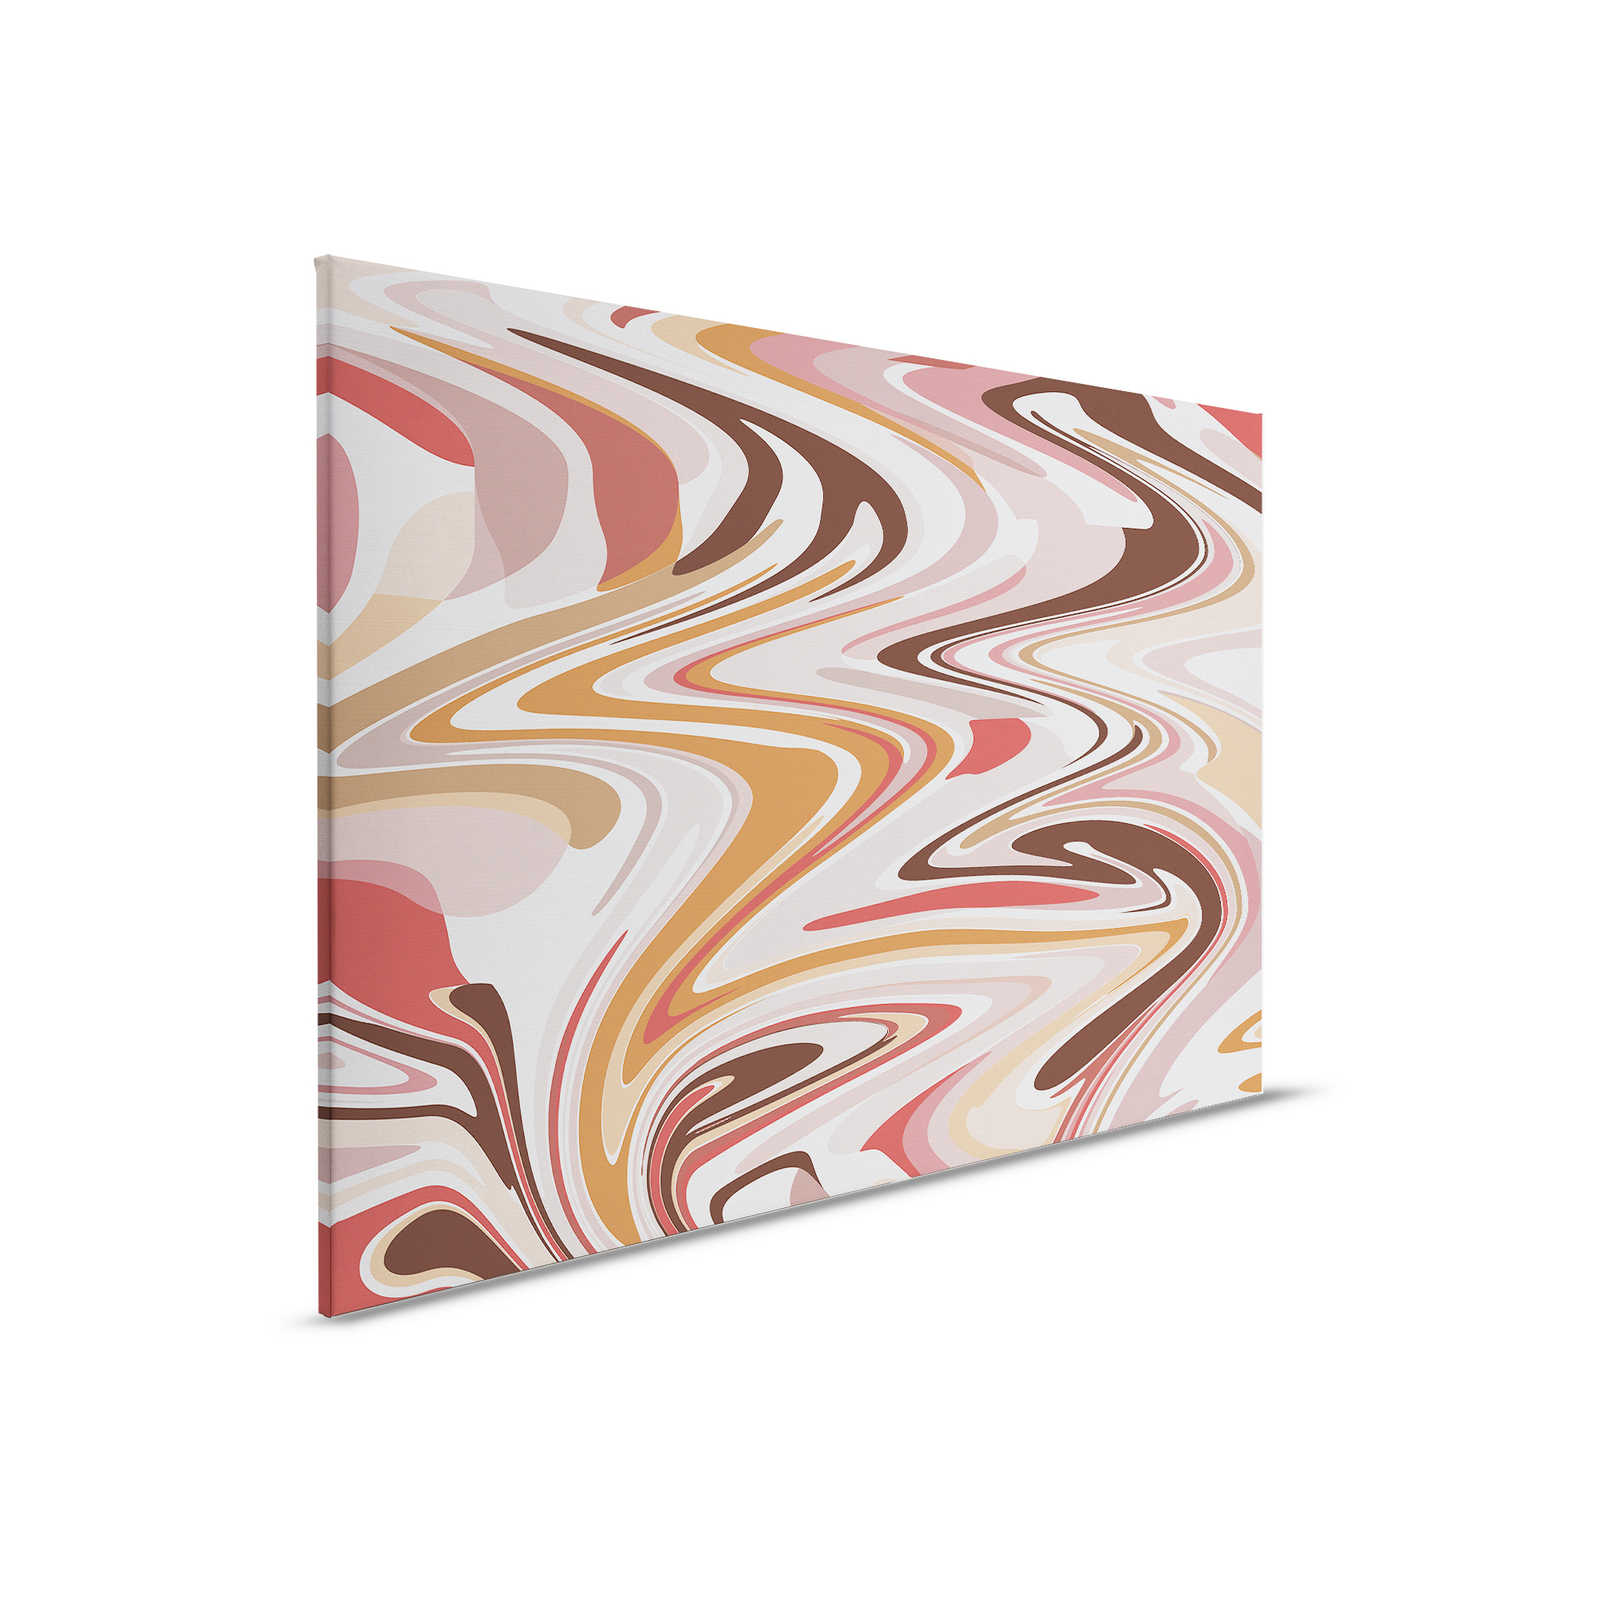         Leinwandbild mit abstraktem Farbmuster in warmen Farbtönen – 0,90 m x 0,60 m
    